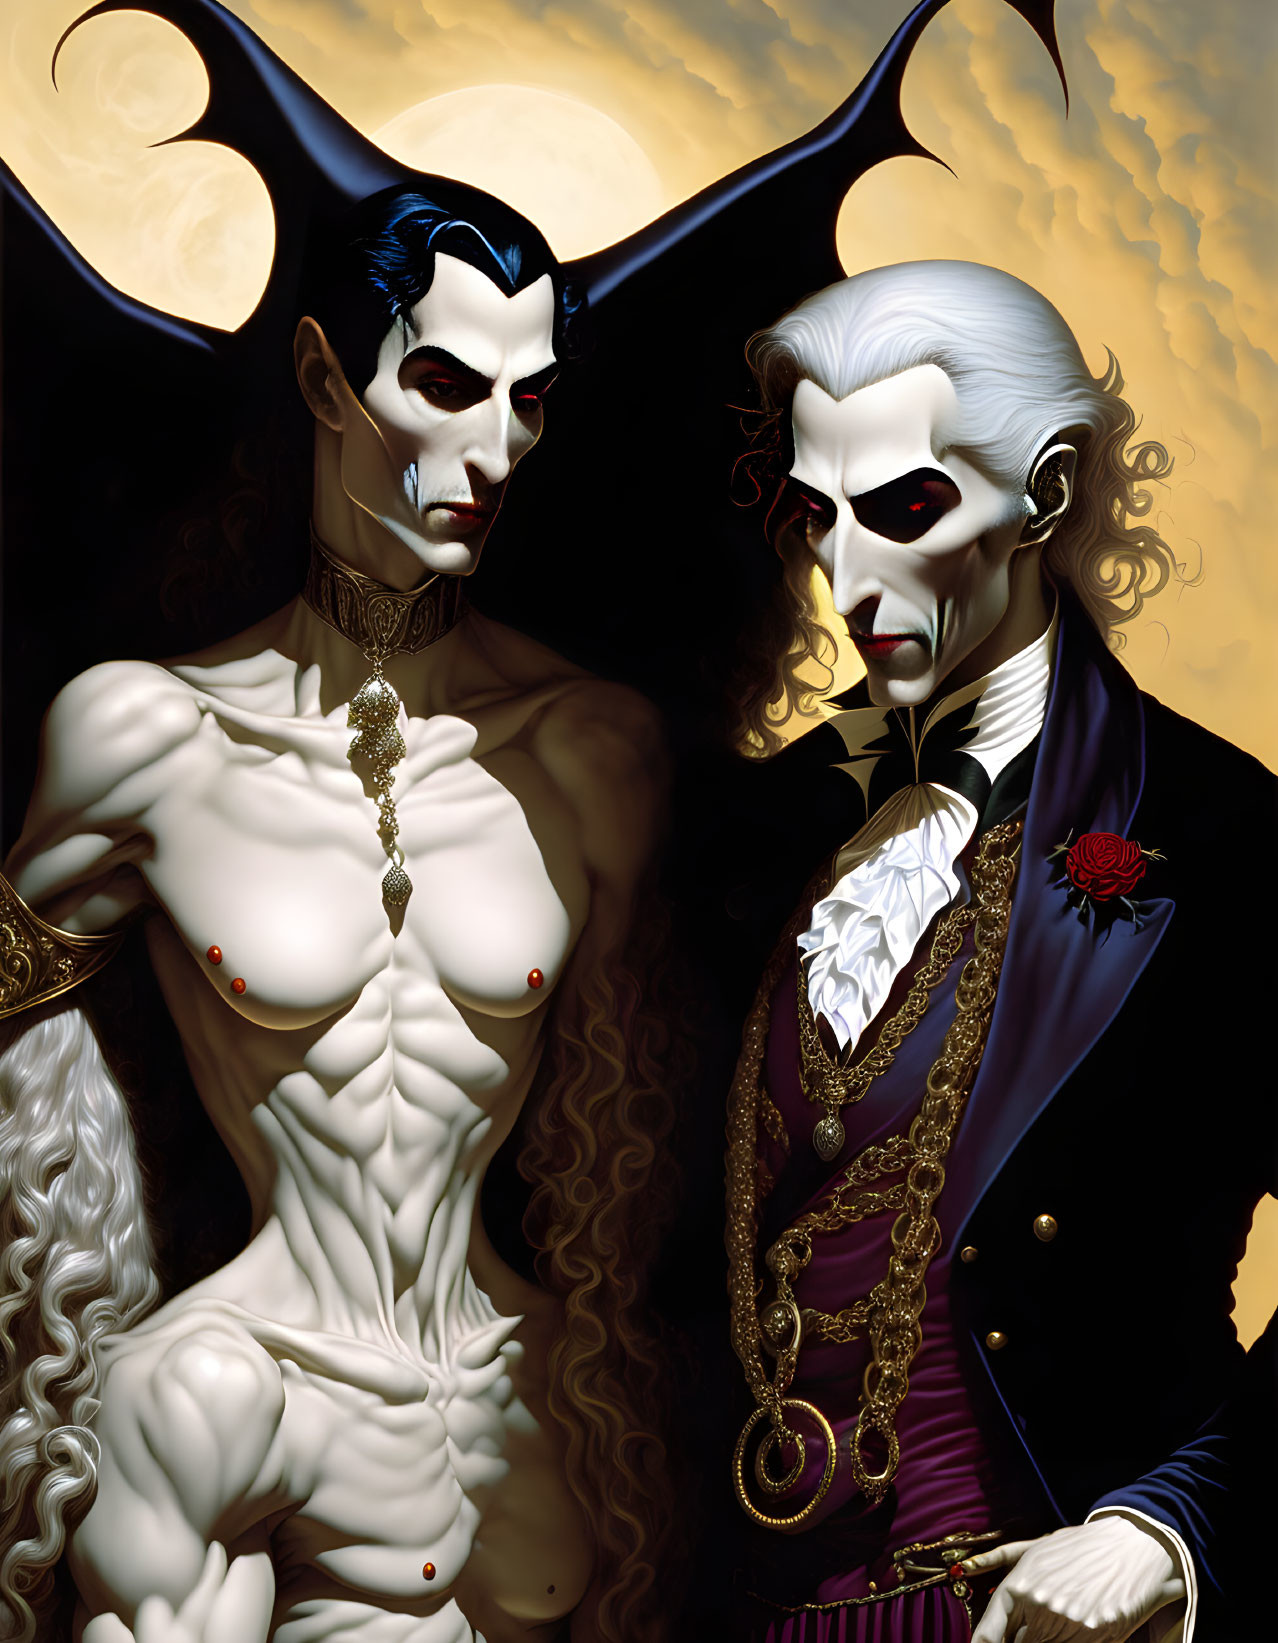 Stylized illustration of two vampiric figures under moonlit sky